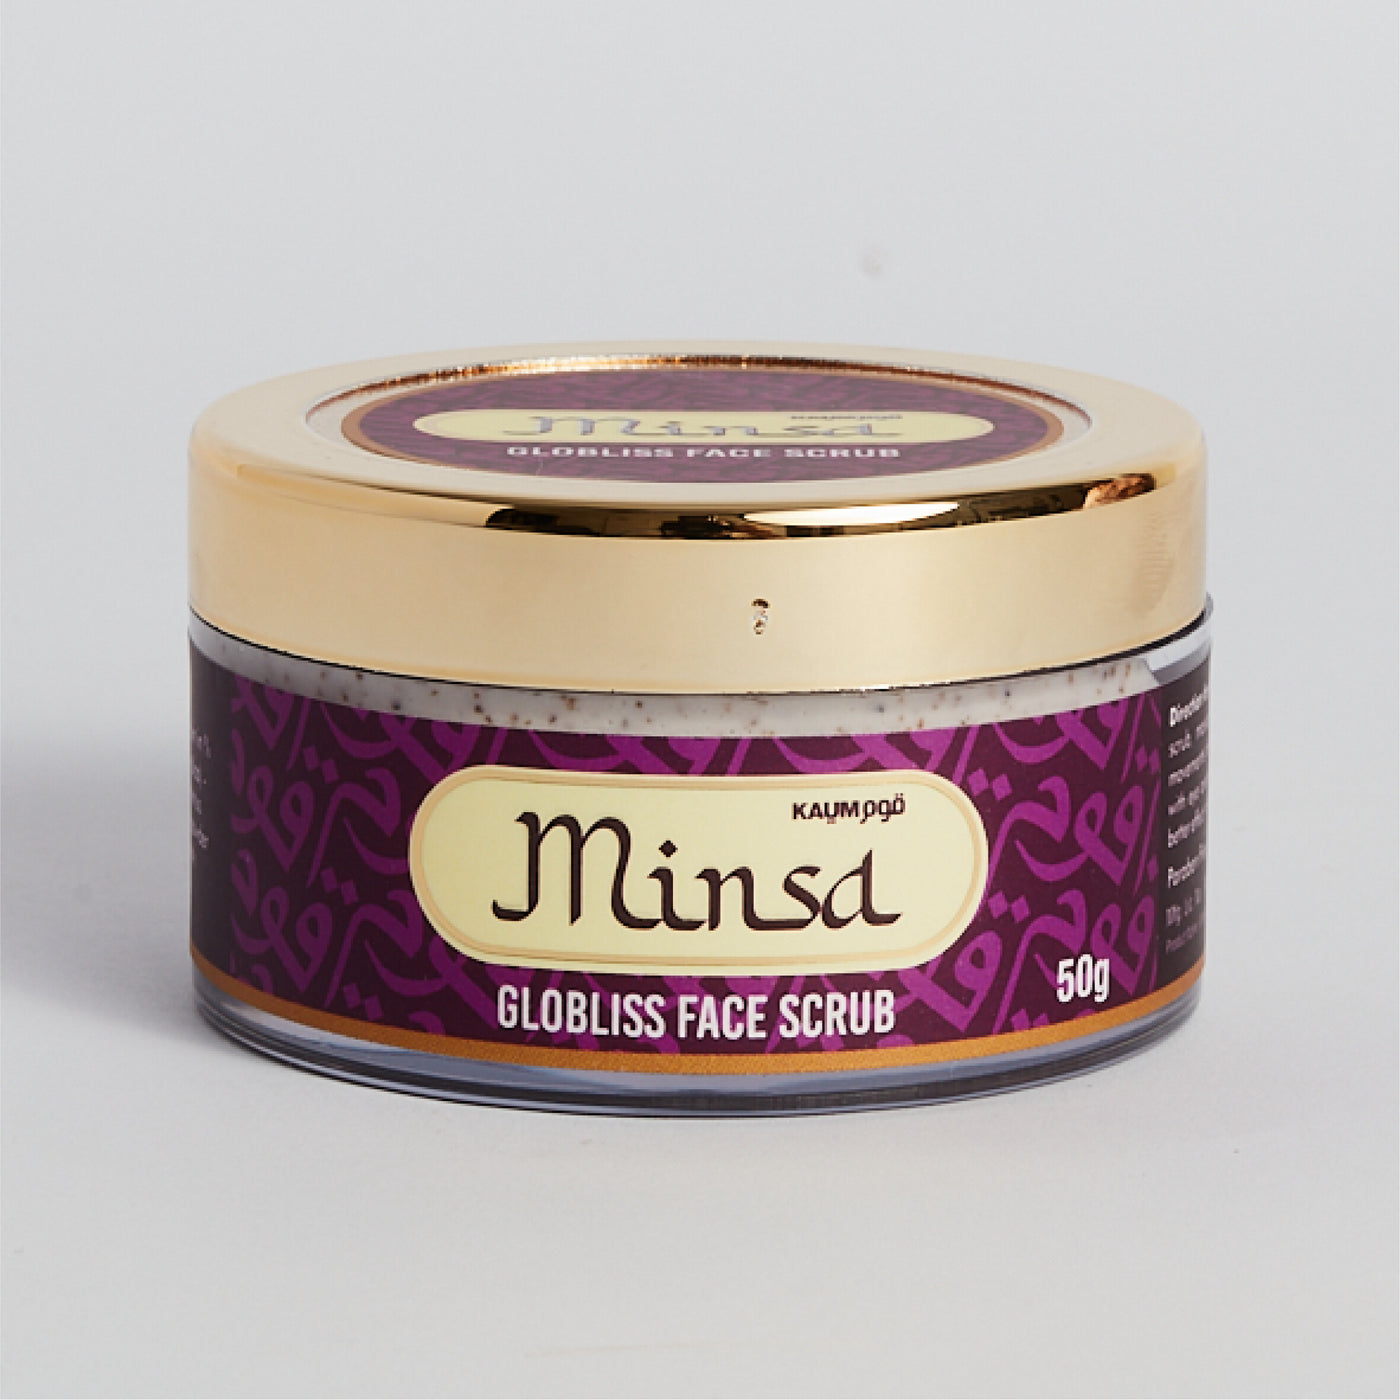 Minsa Globliss Face Scrub 50g: Unveil Radiant Skin with Exfoliating Elegance